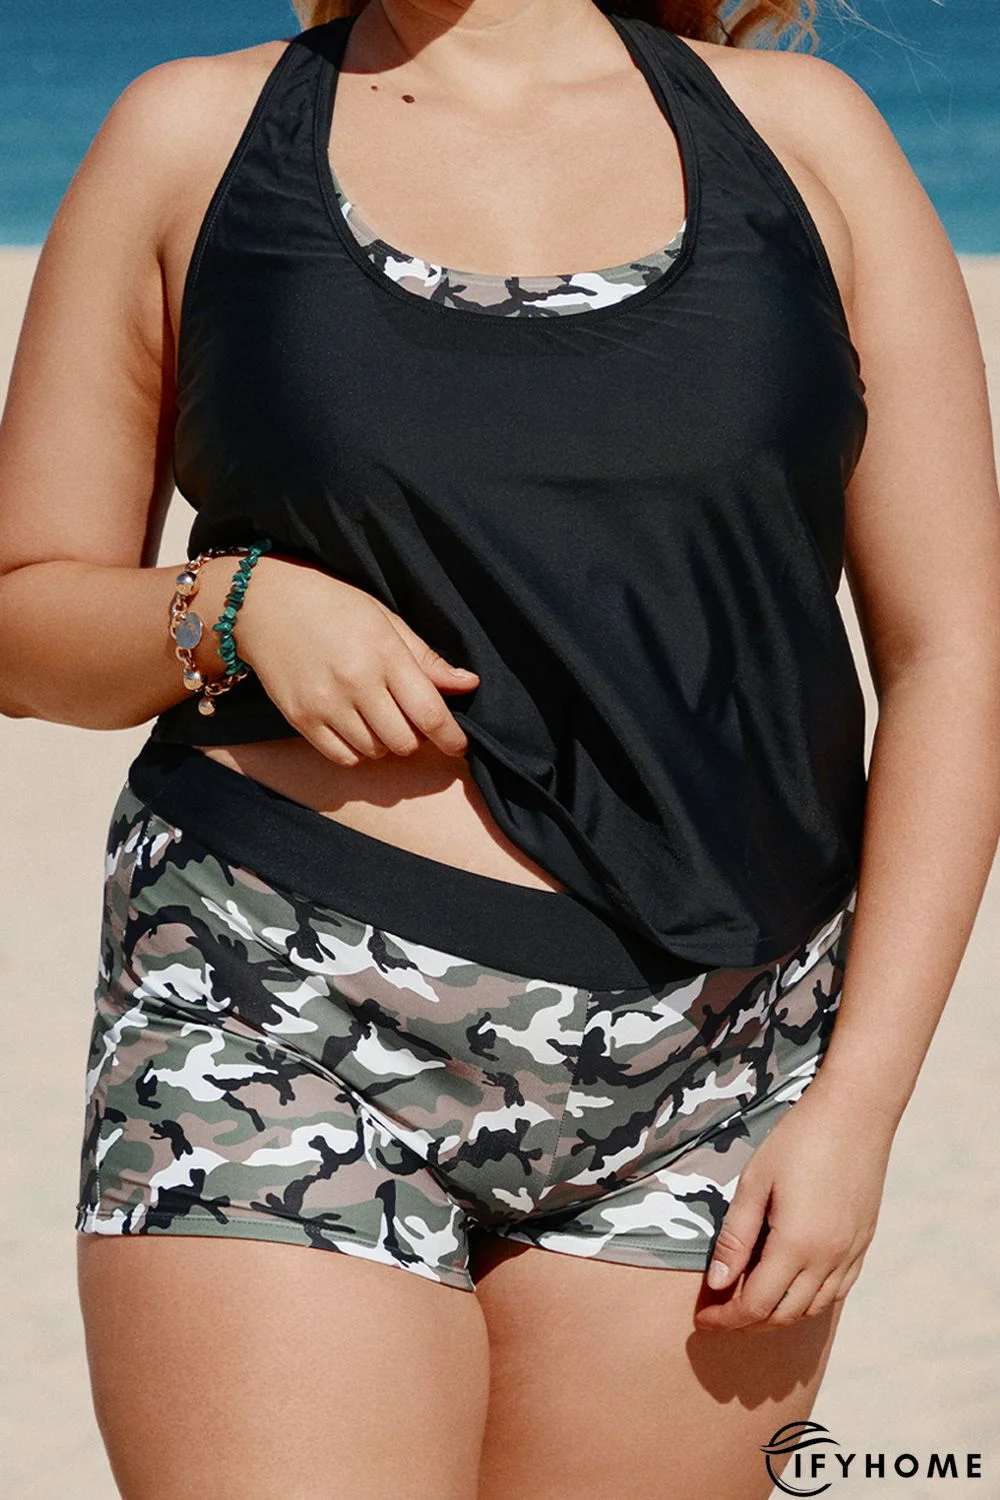 Black Camouflage Strappy Criss Cross Plus Size Three Piece Bikini Sets | IFYHOME